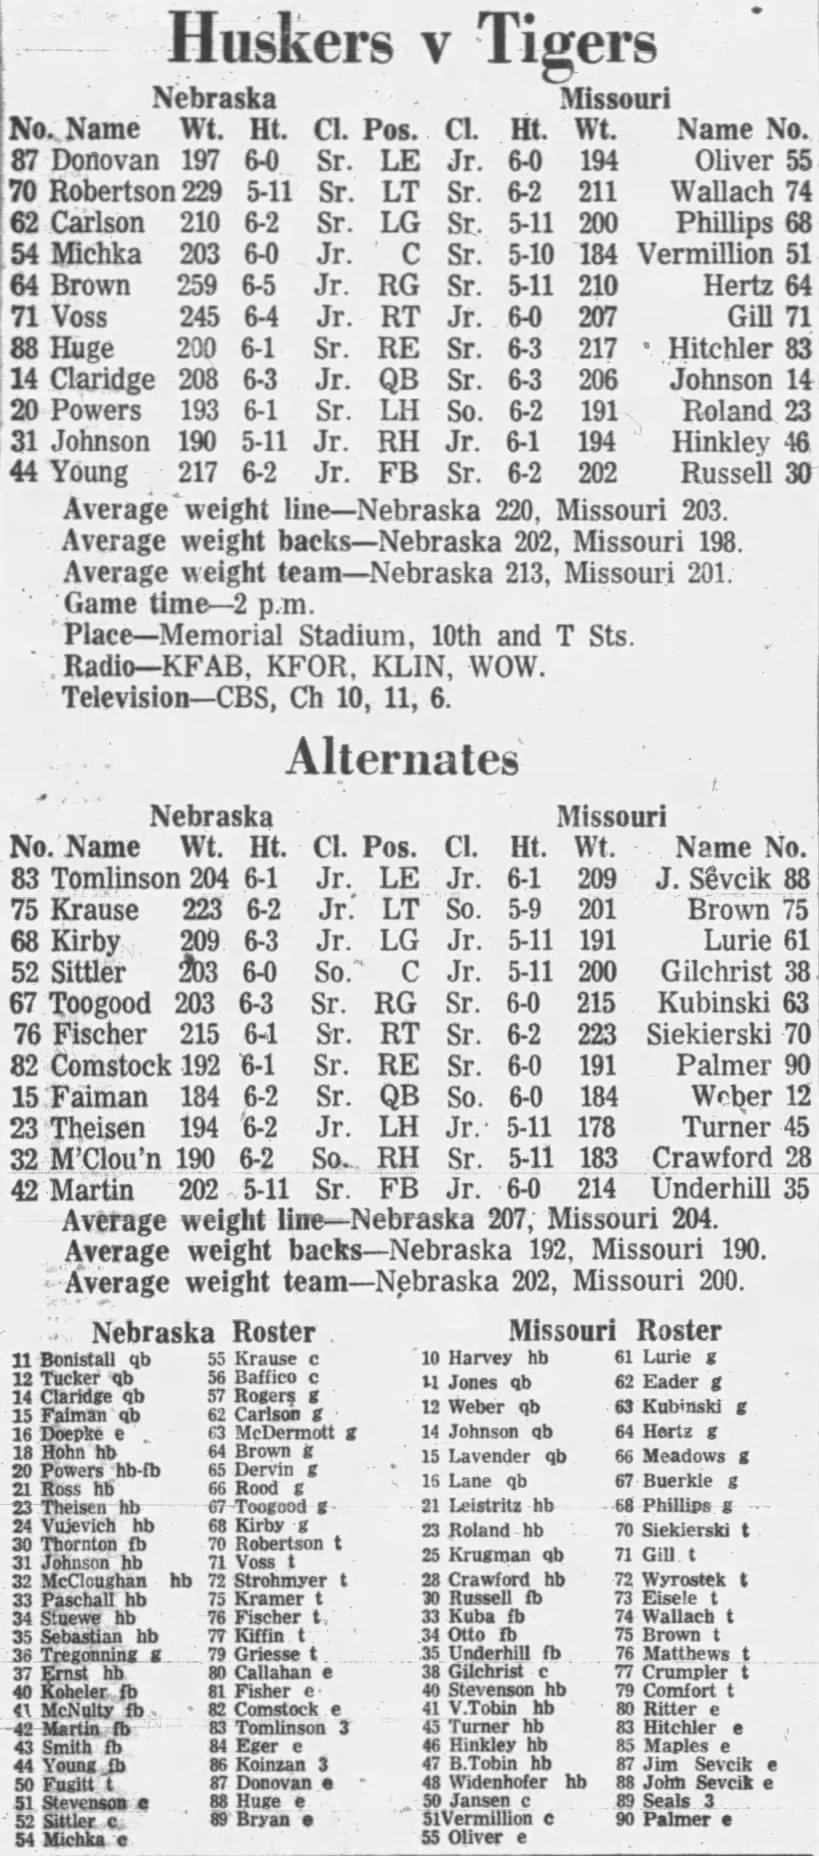 1961 Nebraska-Missouri football game lineups